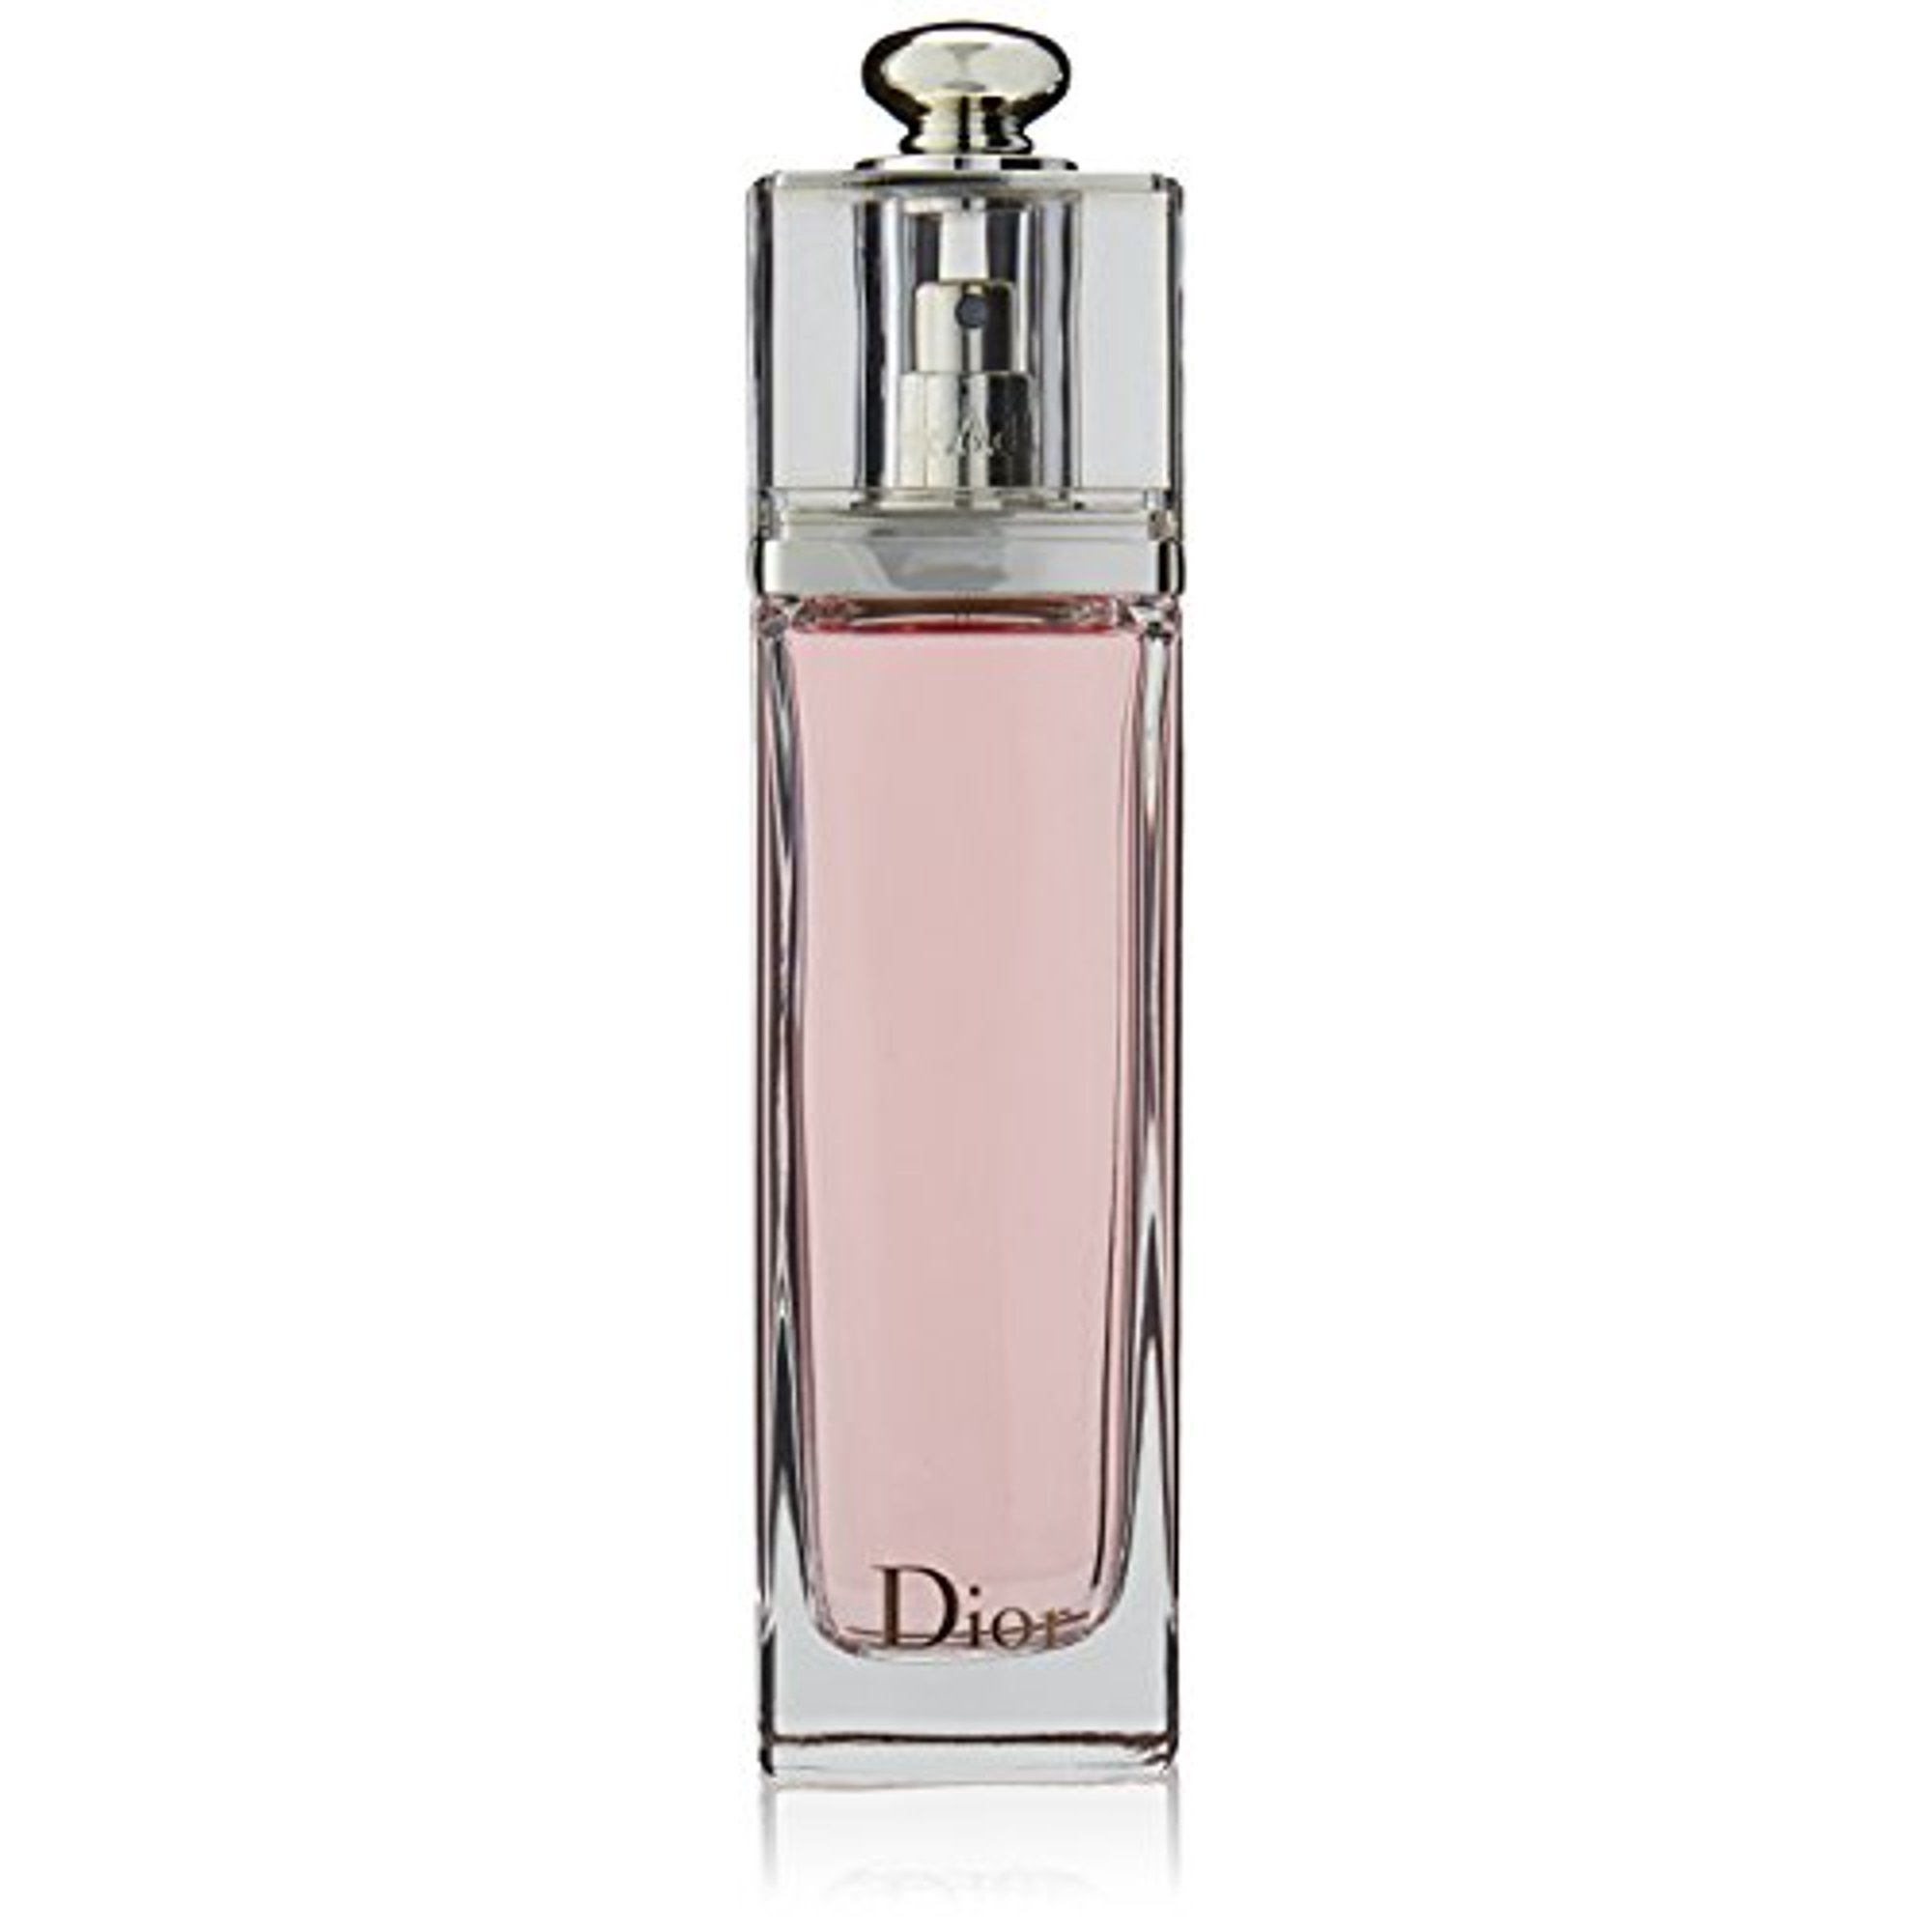 Buy Dior Addict Eau Fraiche by Christian Dior for Women EDT 100 mL ...